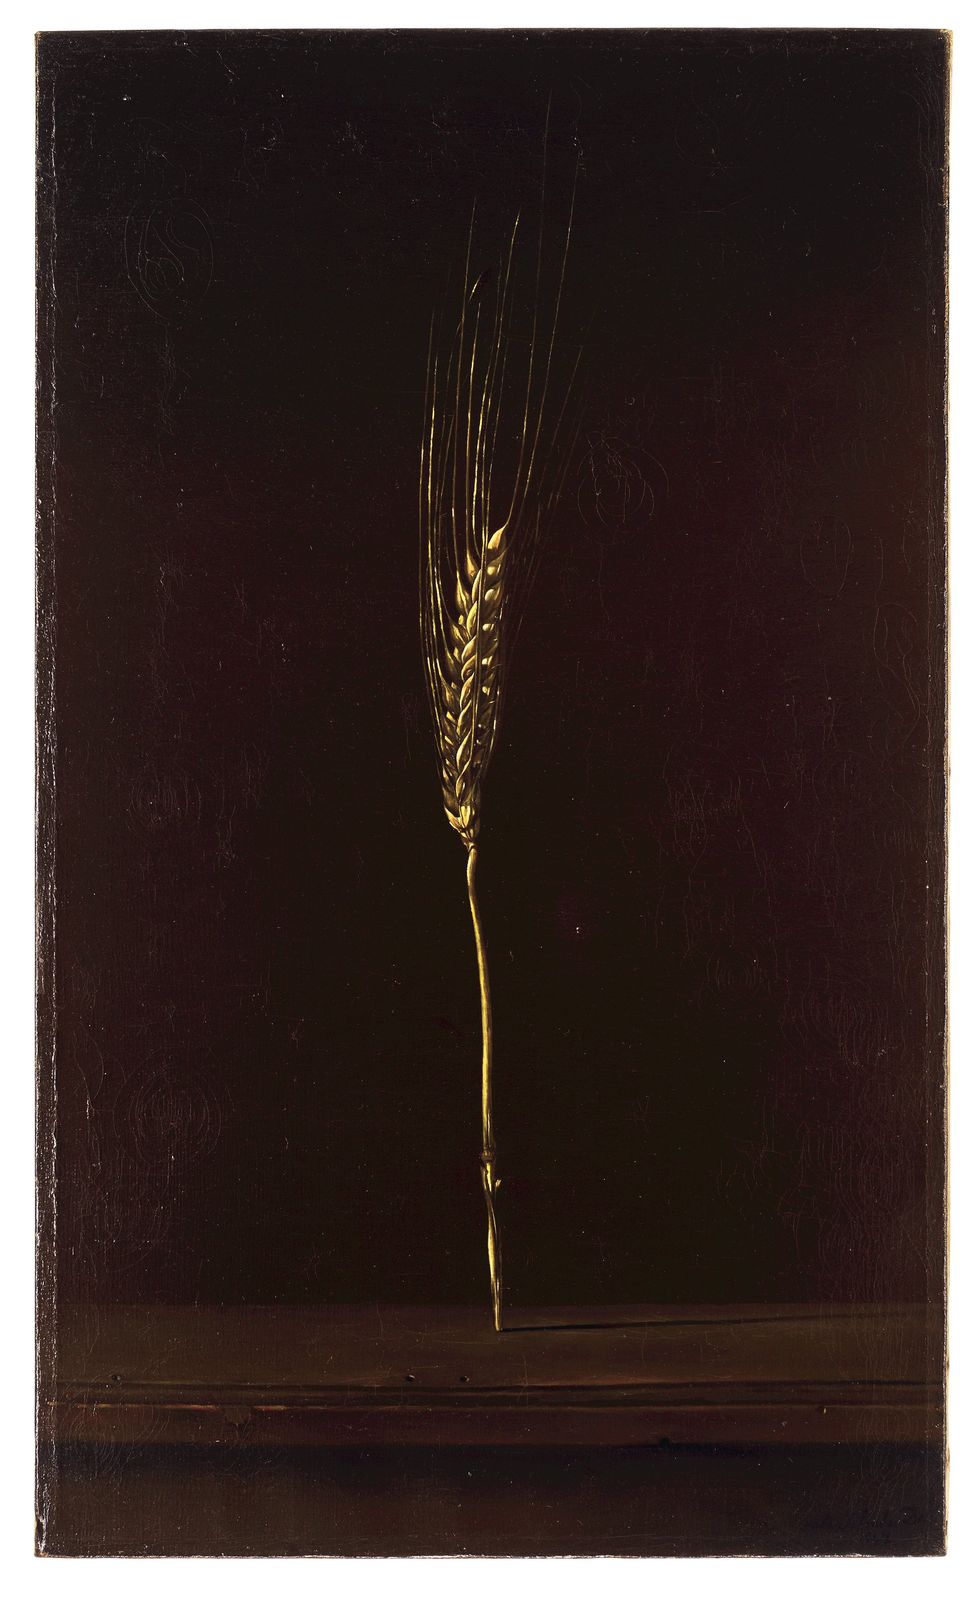 Twig, Grass family, Snapshot, Still life photography, Rectangle, Plant stem, Stock photography, Still life, Wheat, 